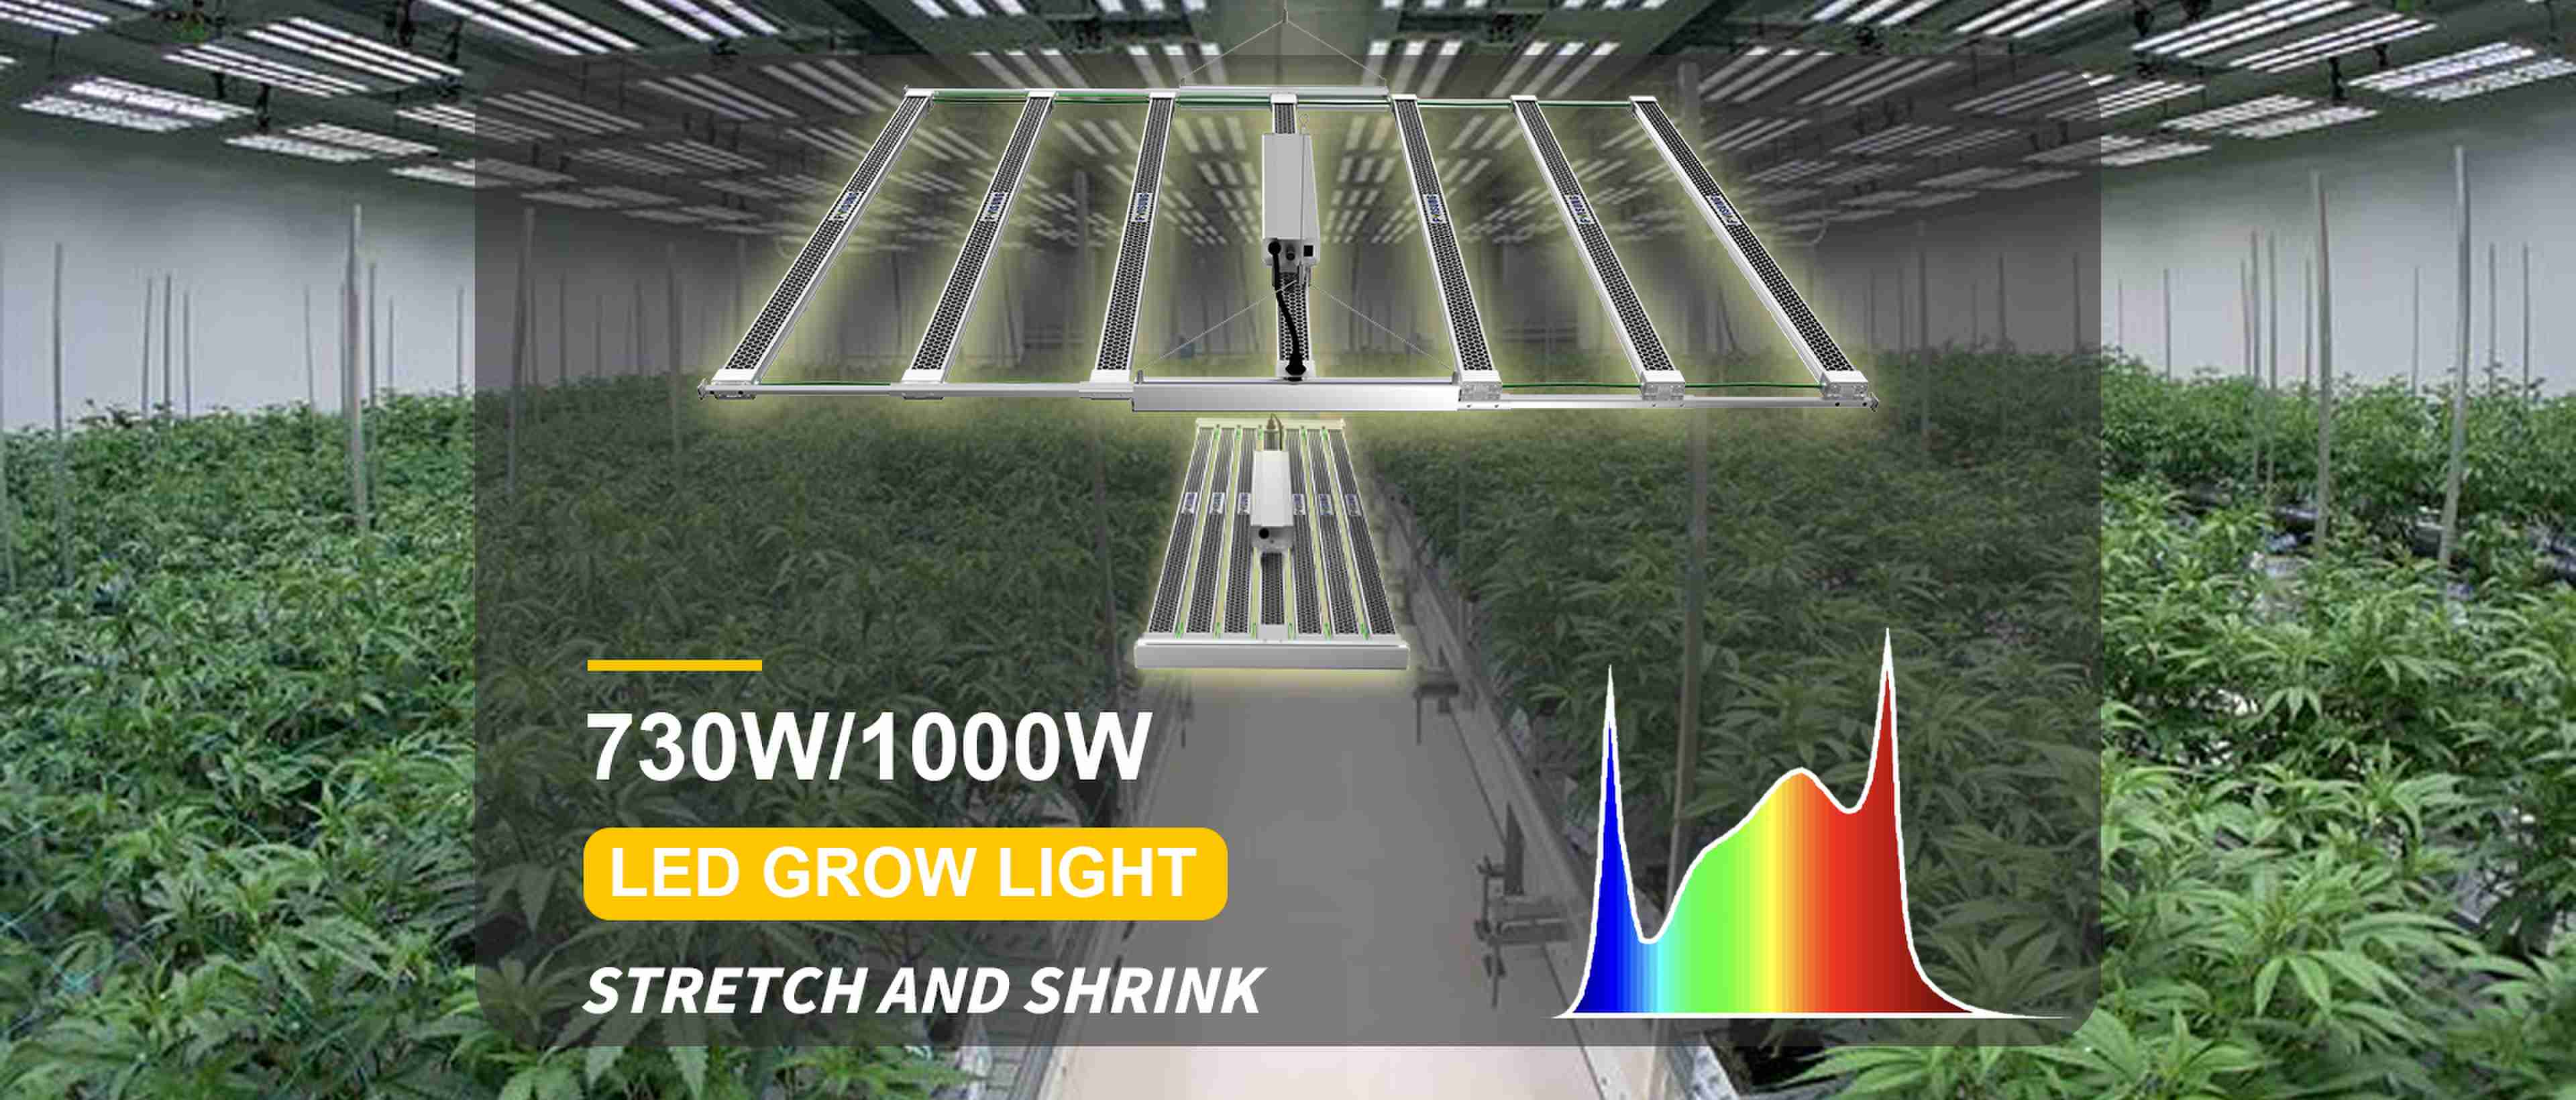 730W/1000W Led Grow Light